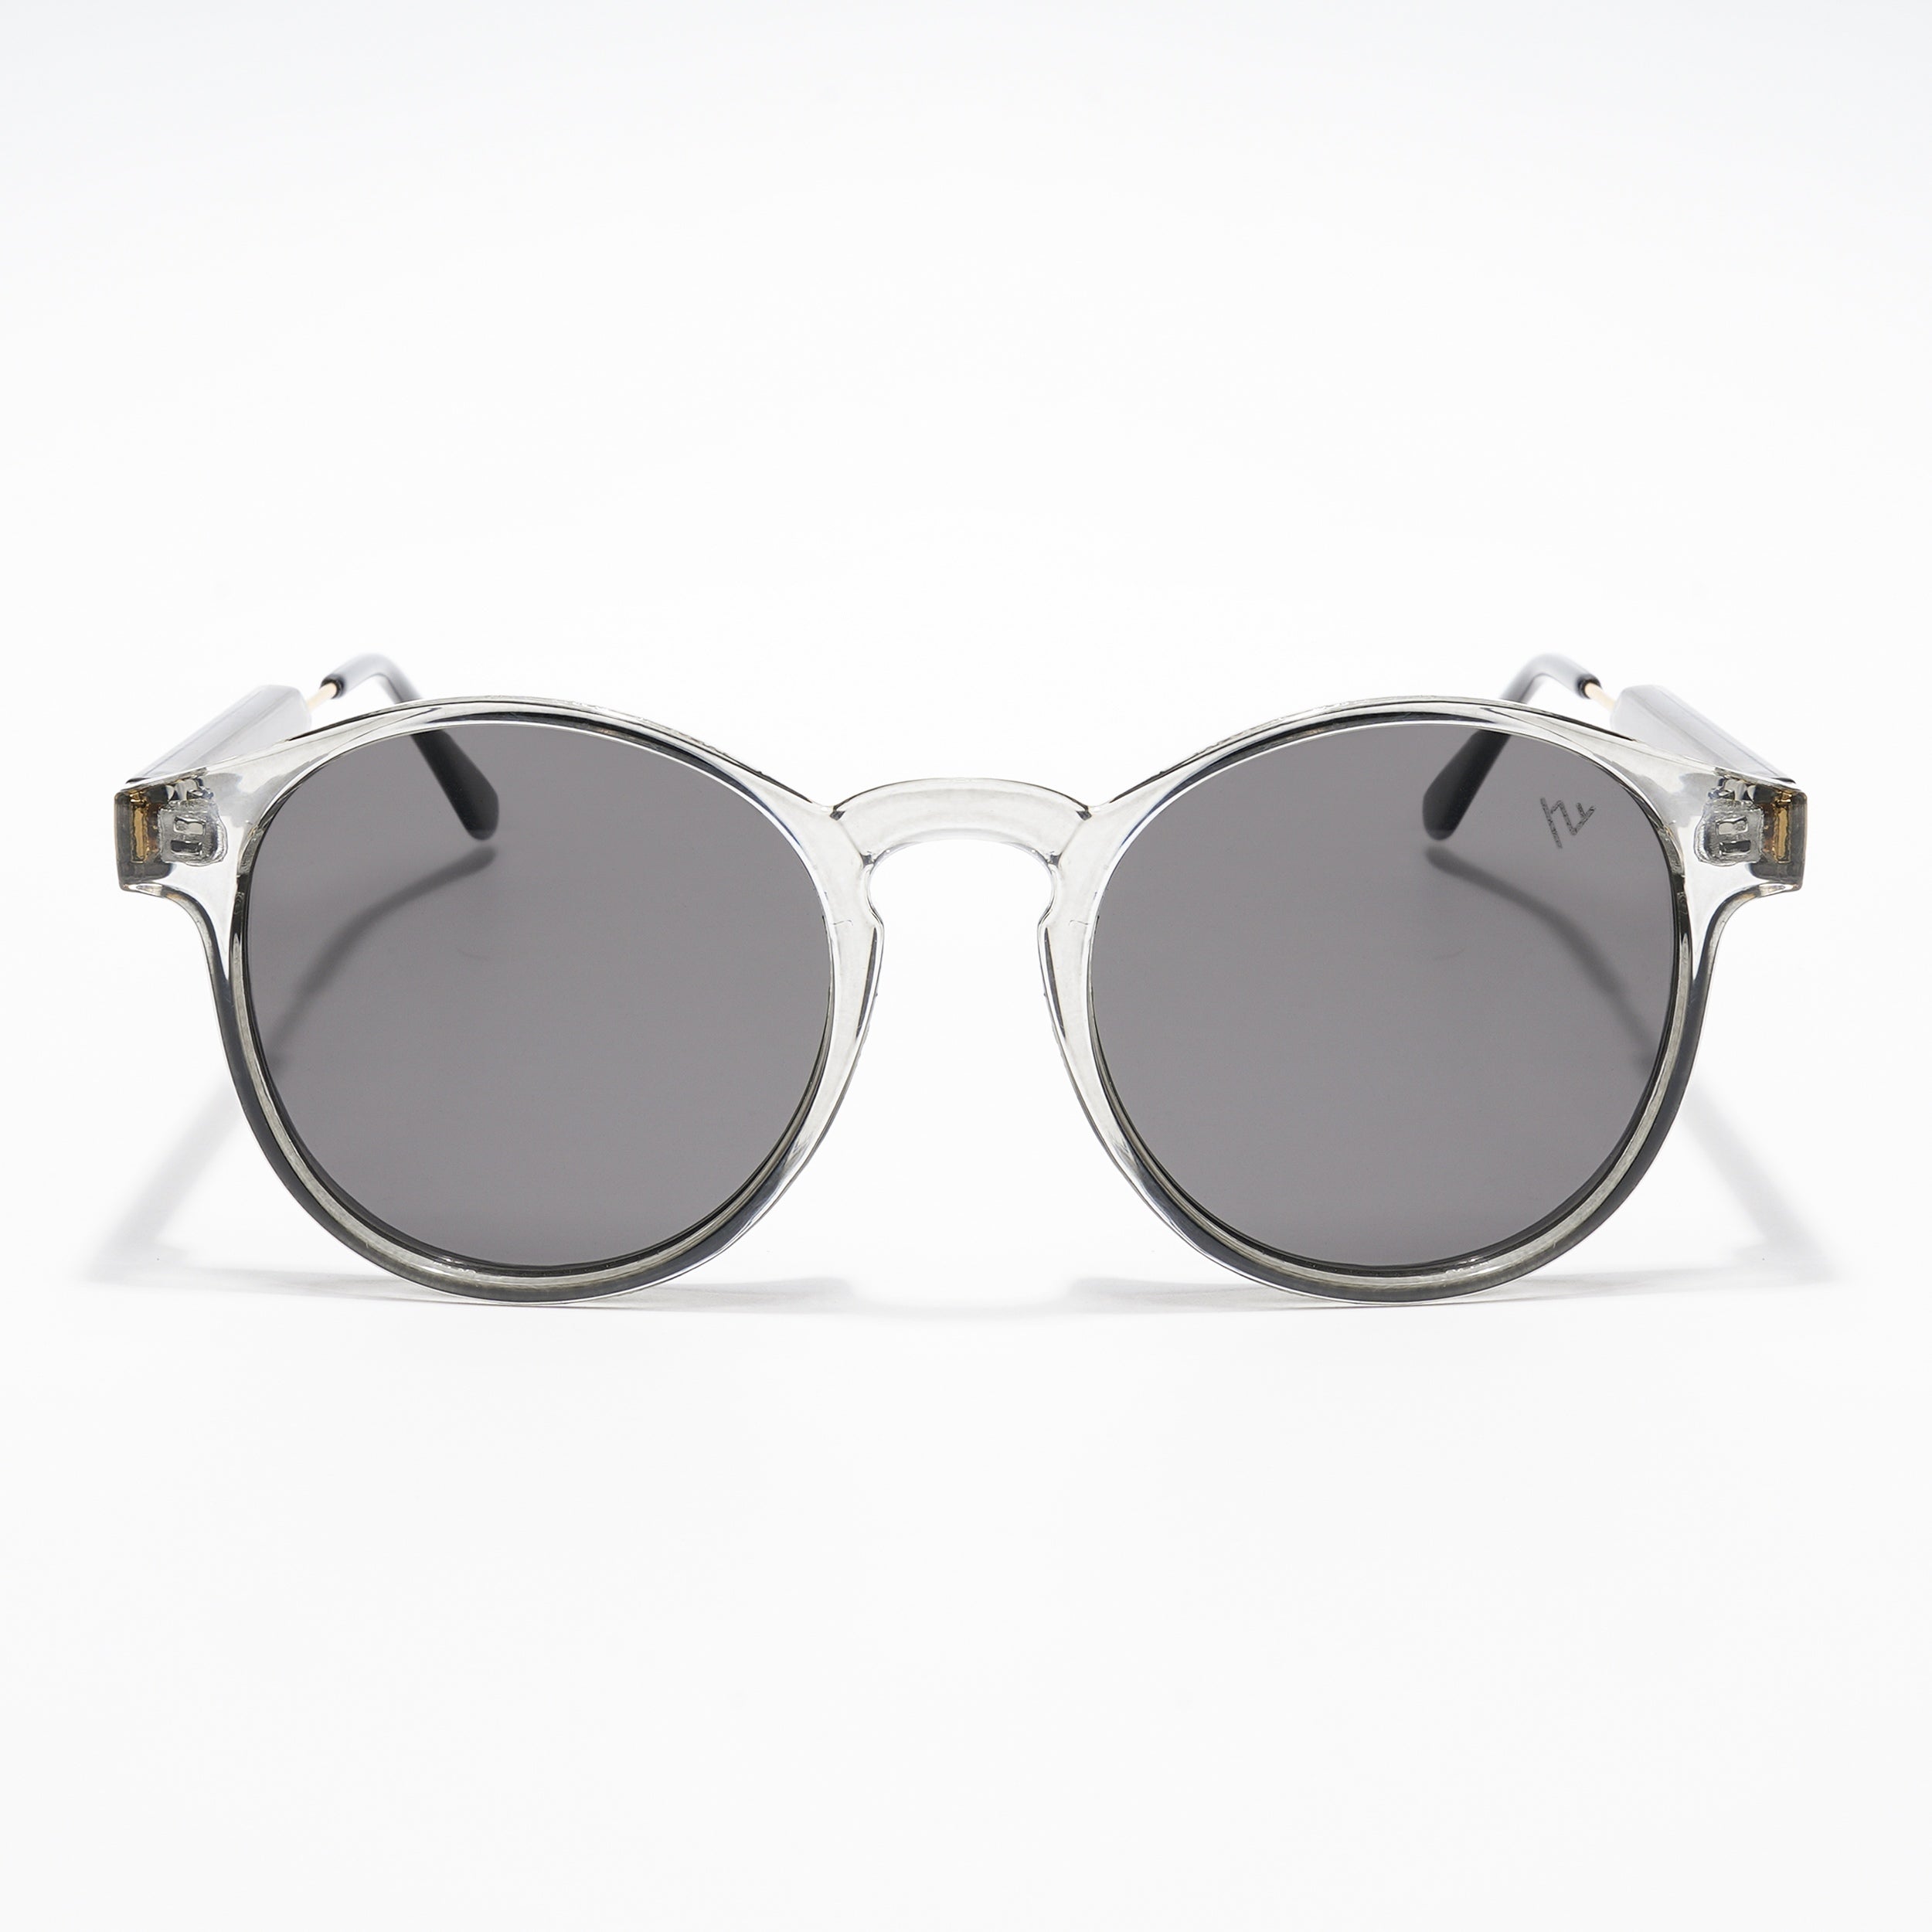 Voyage Grey Round Sunglasses - MG3878